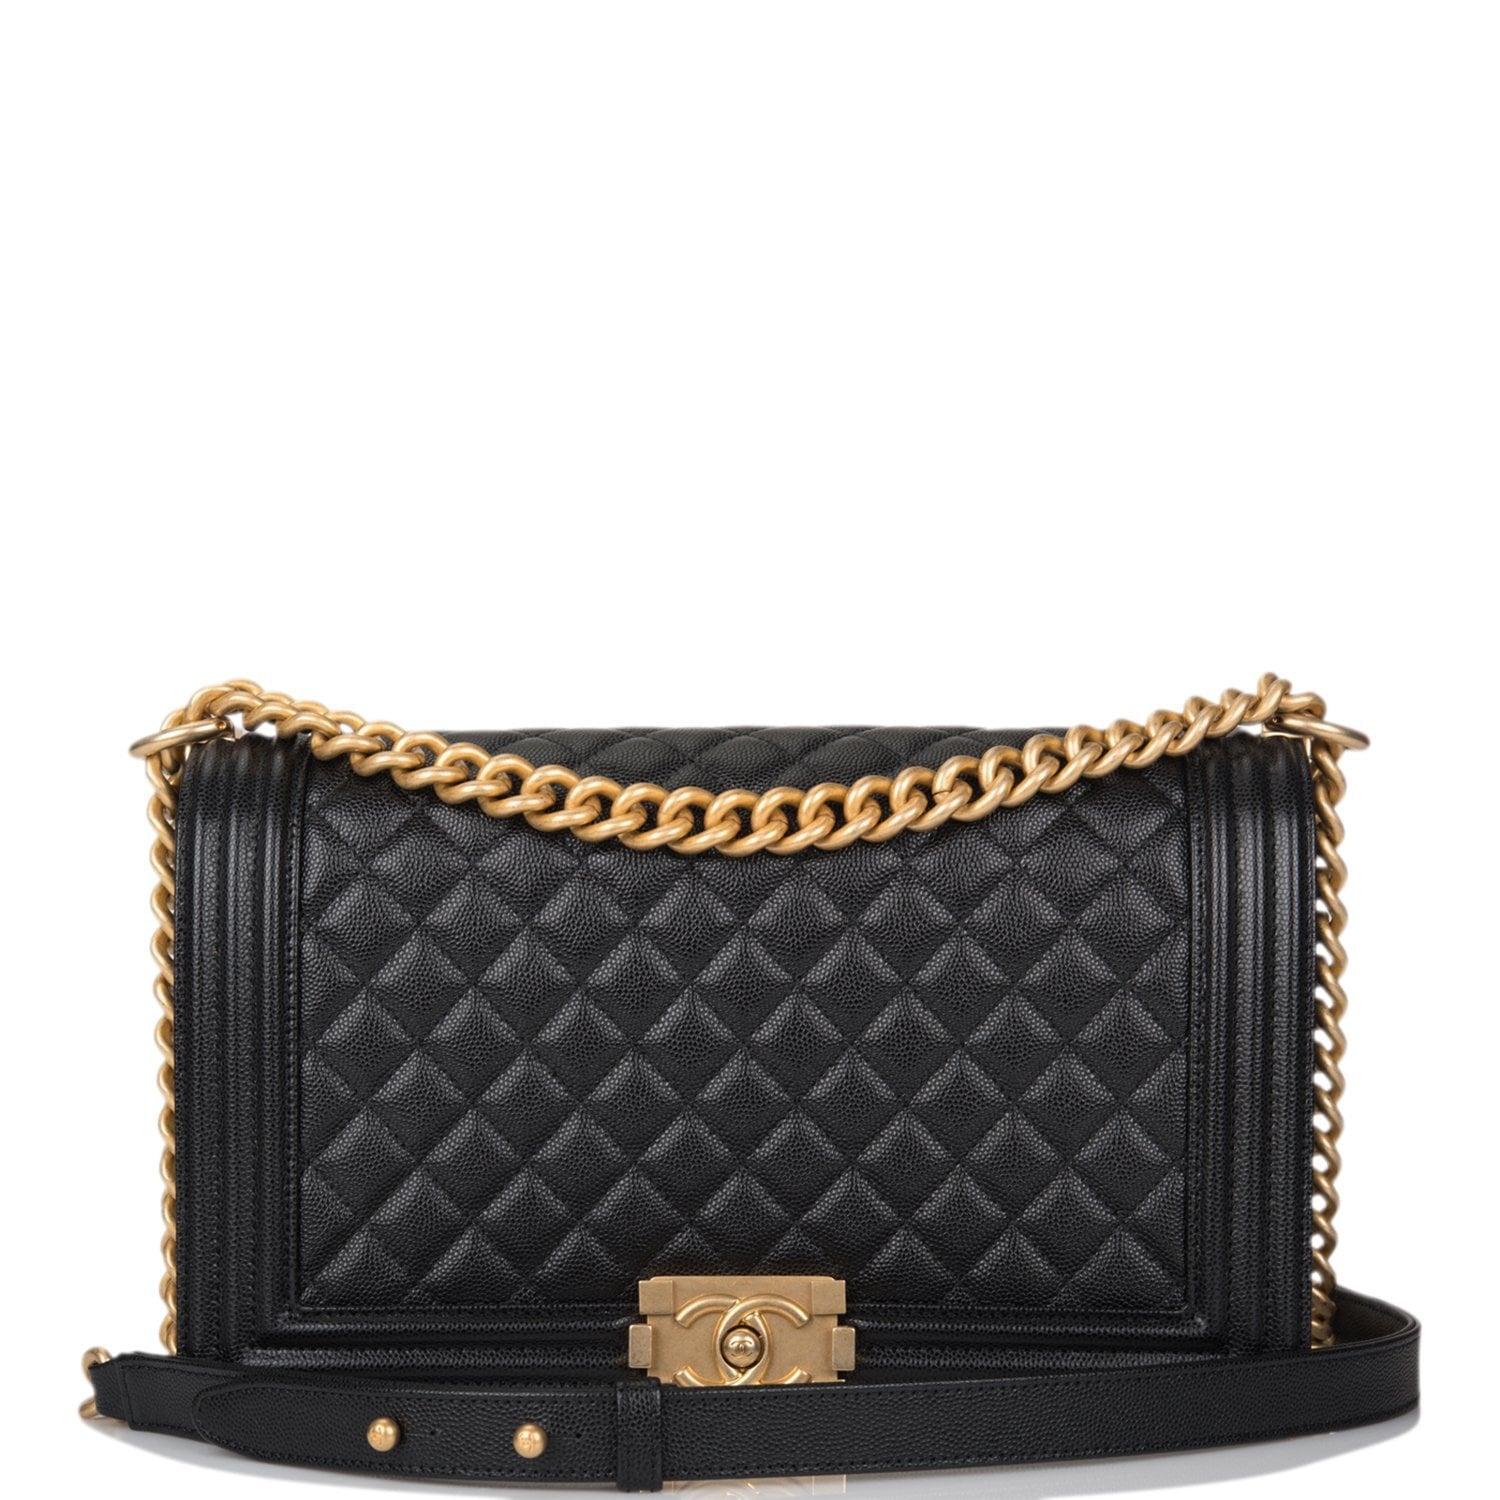 Chanel Black Quilted Caviar New Medium 